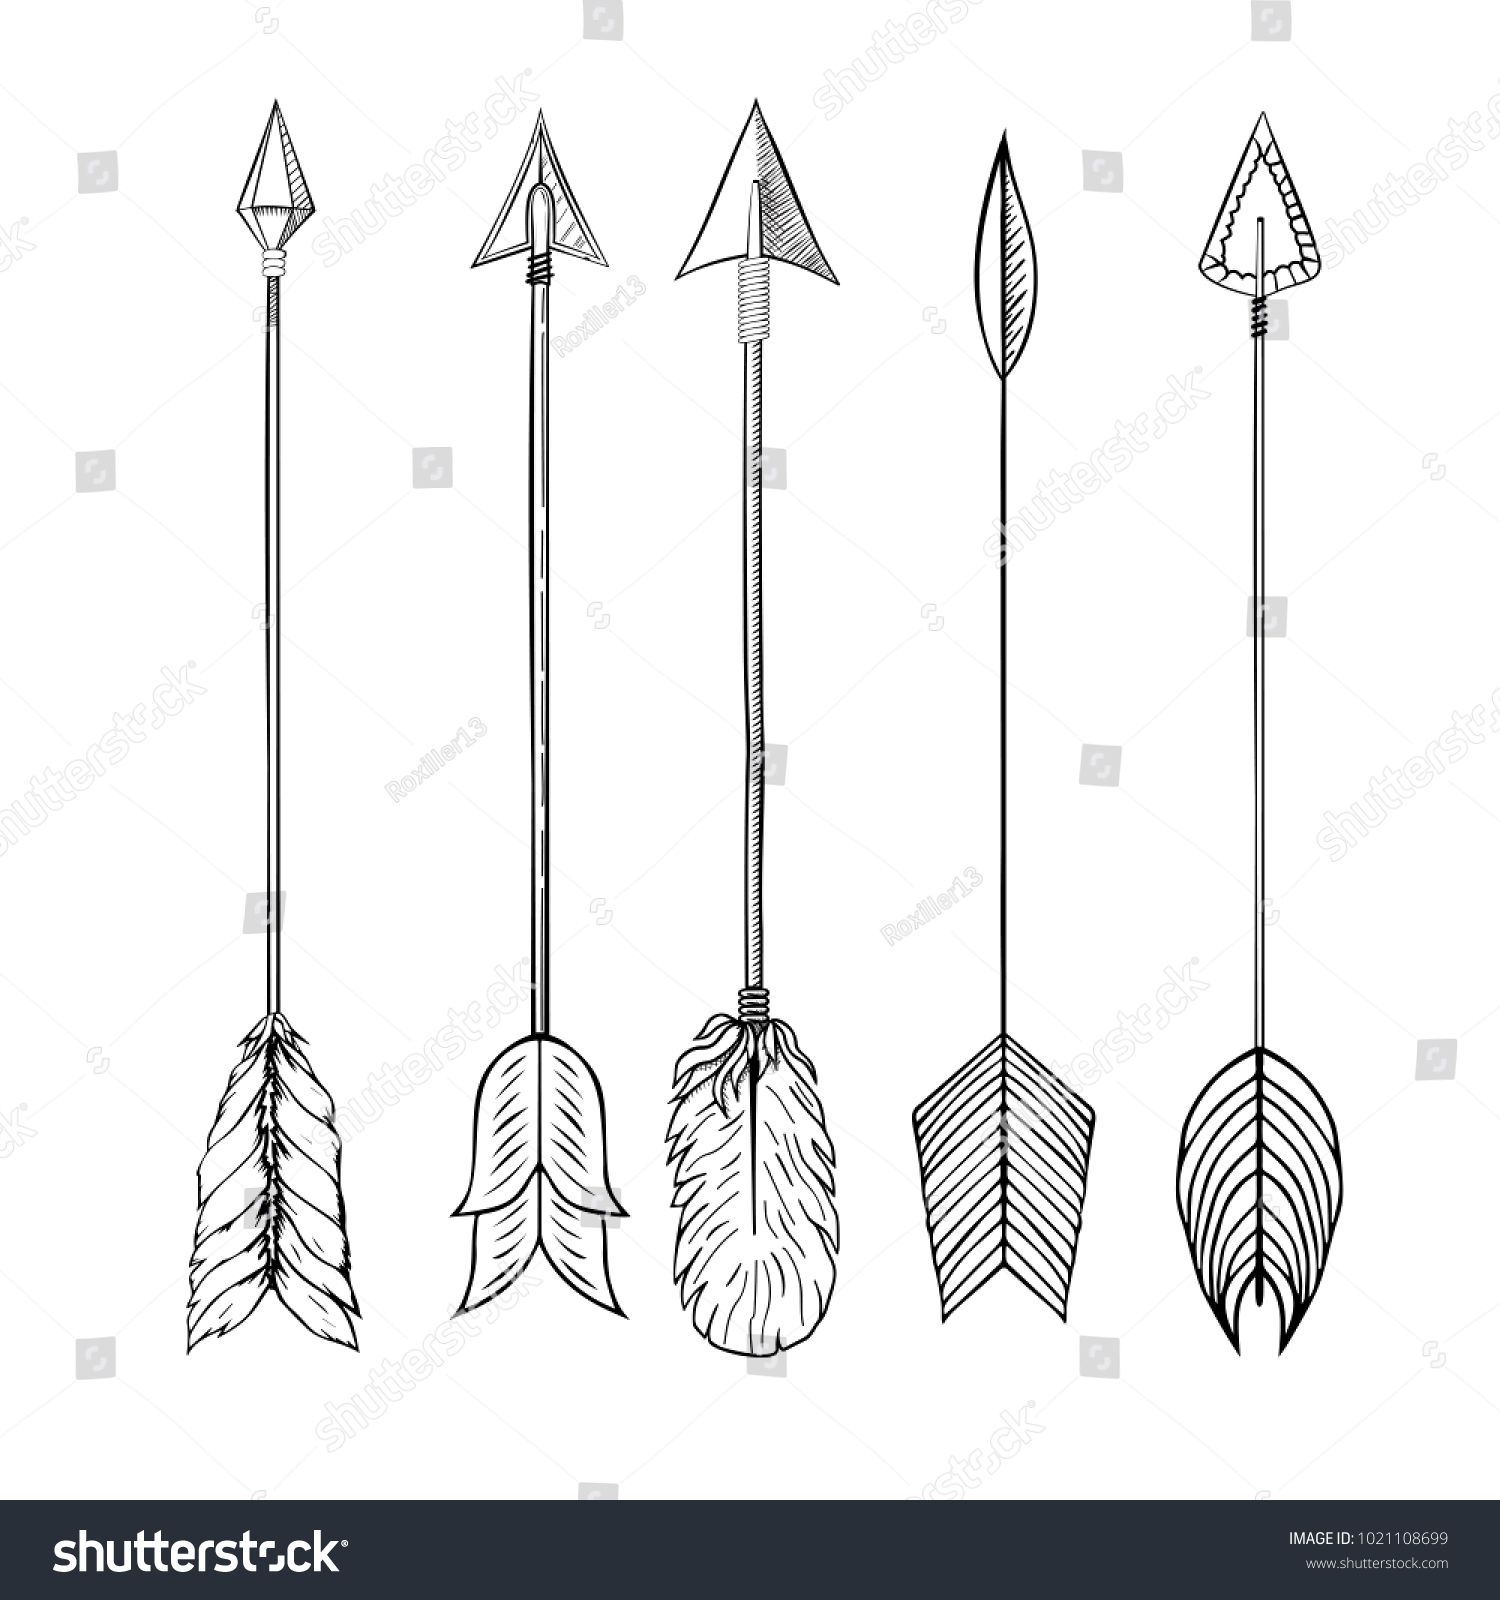 Tribal Indian arrow set. Ethnic hand drawn illustration. #1021108699